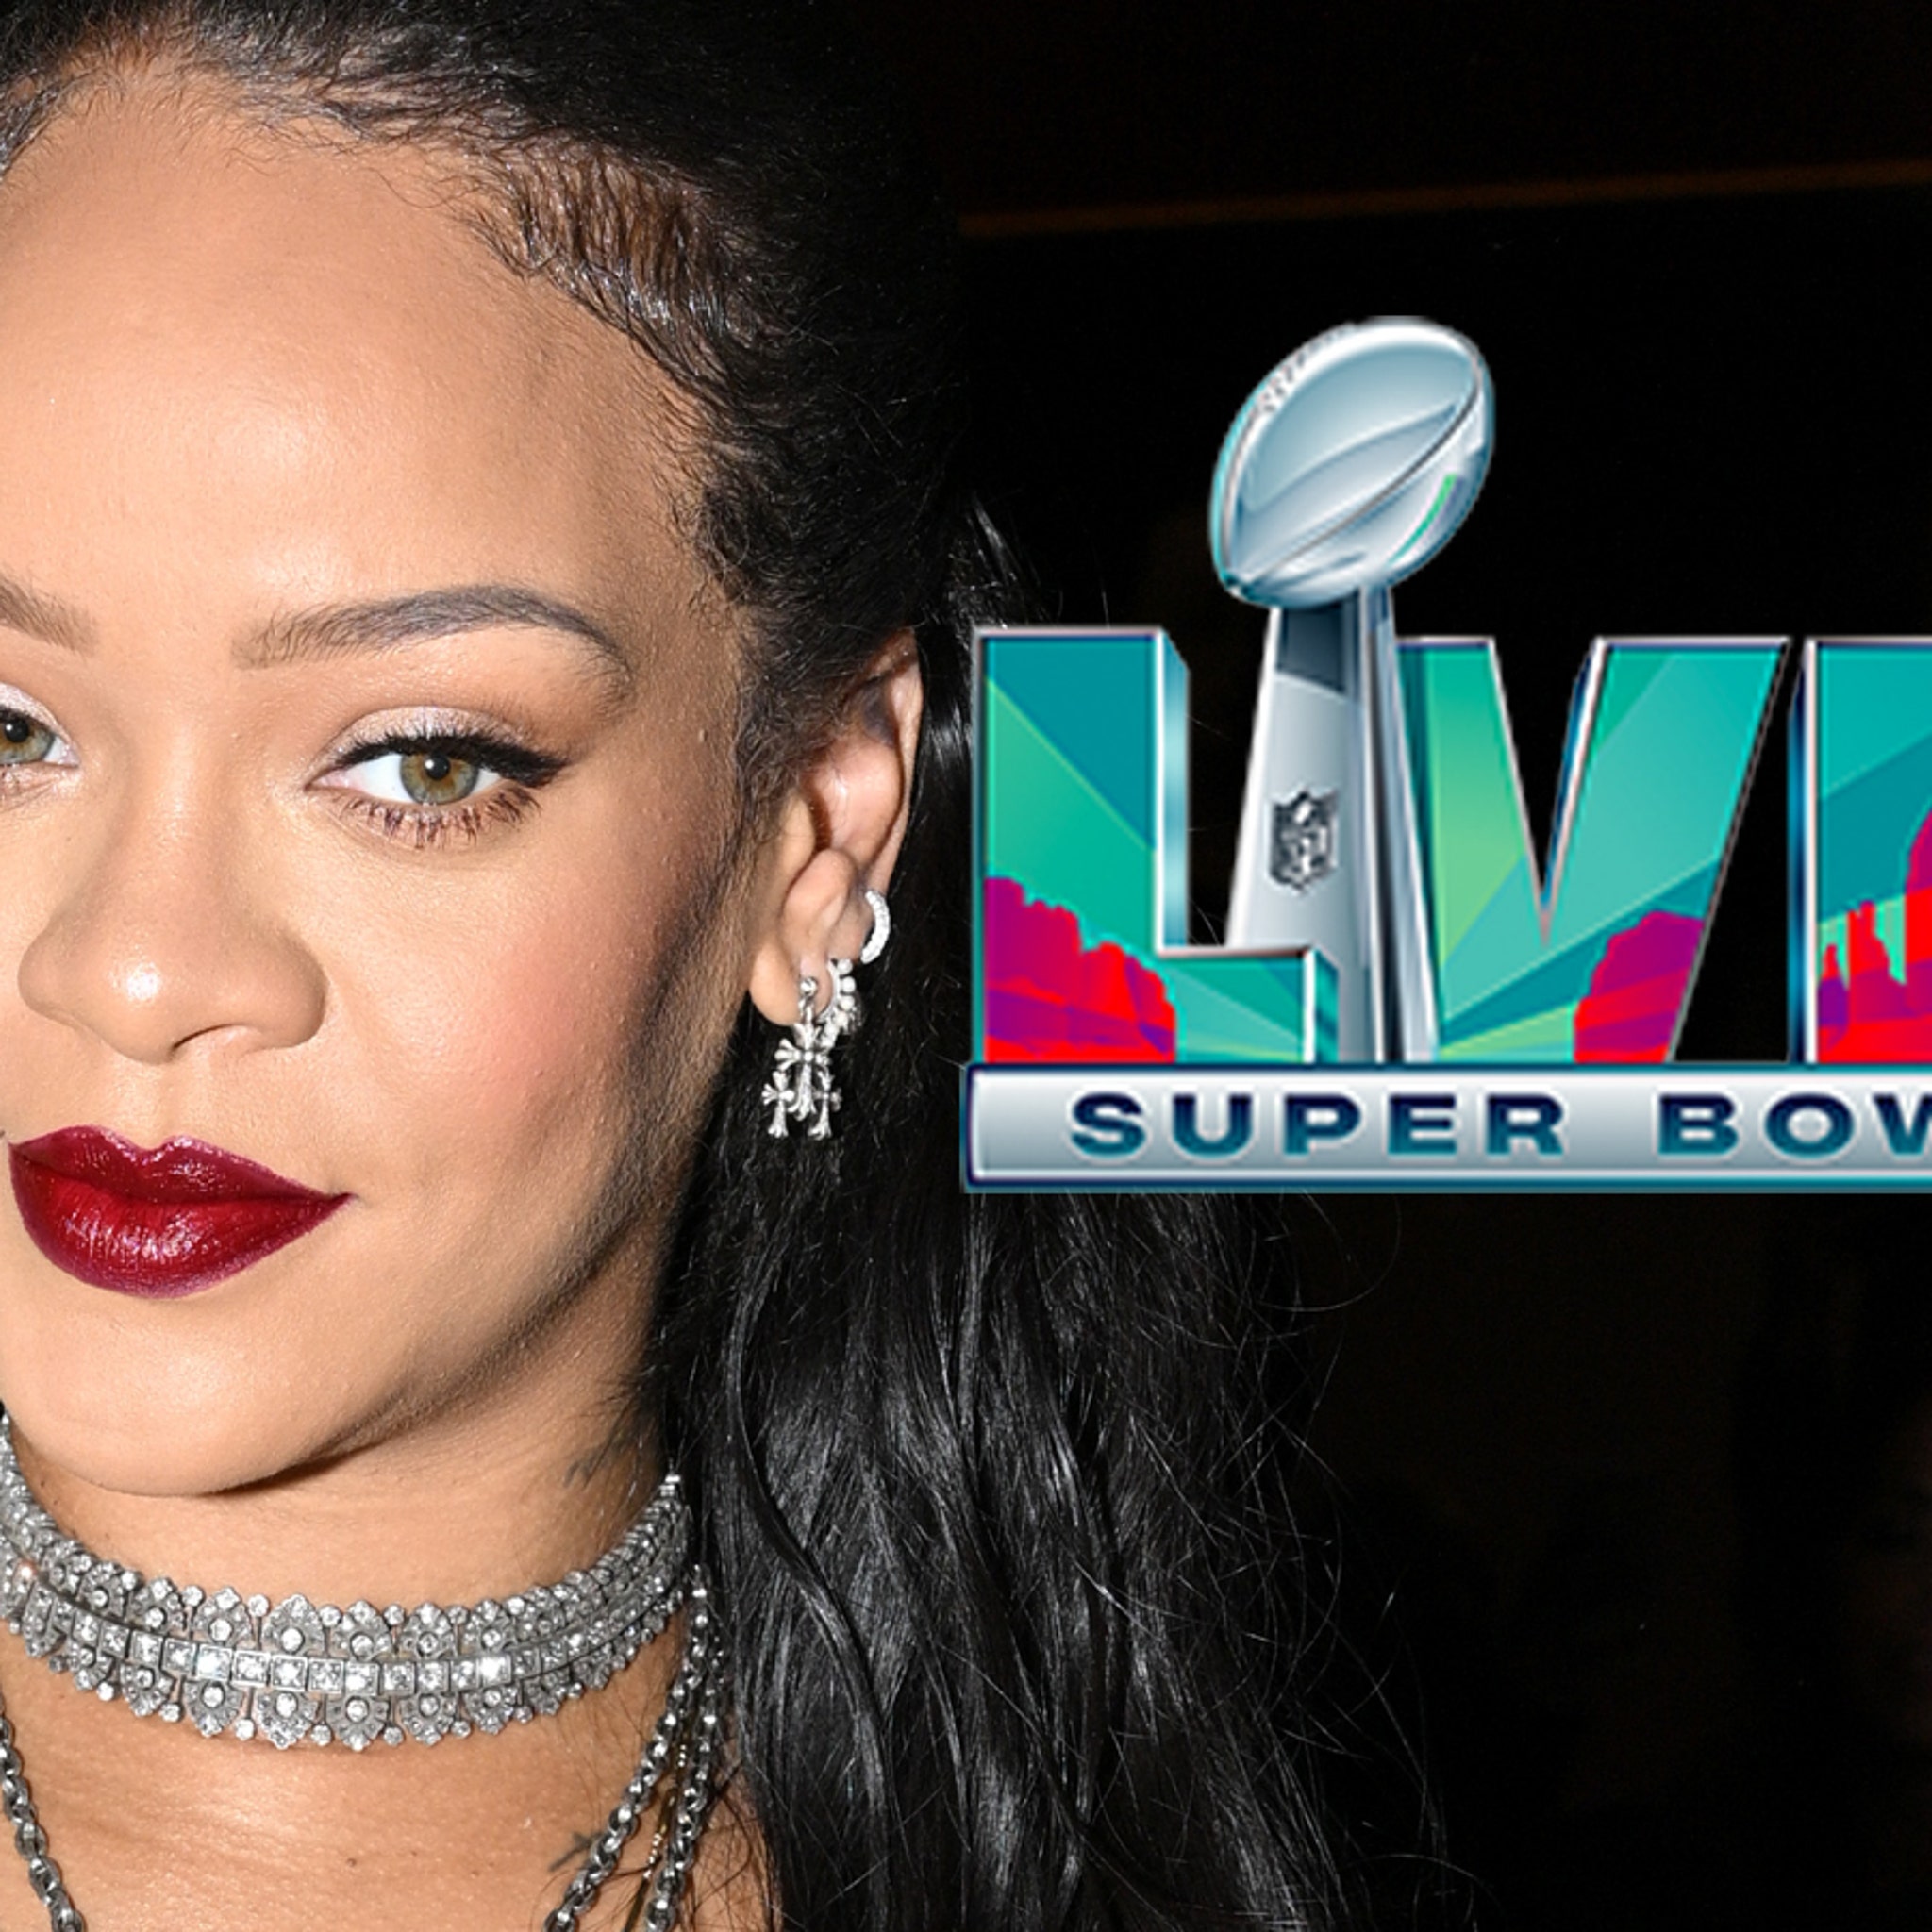 Rihanna to Headline Super Bowl Halftime Show